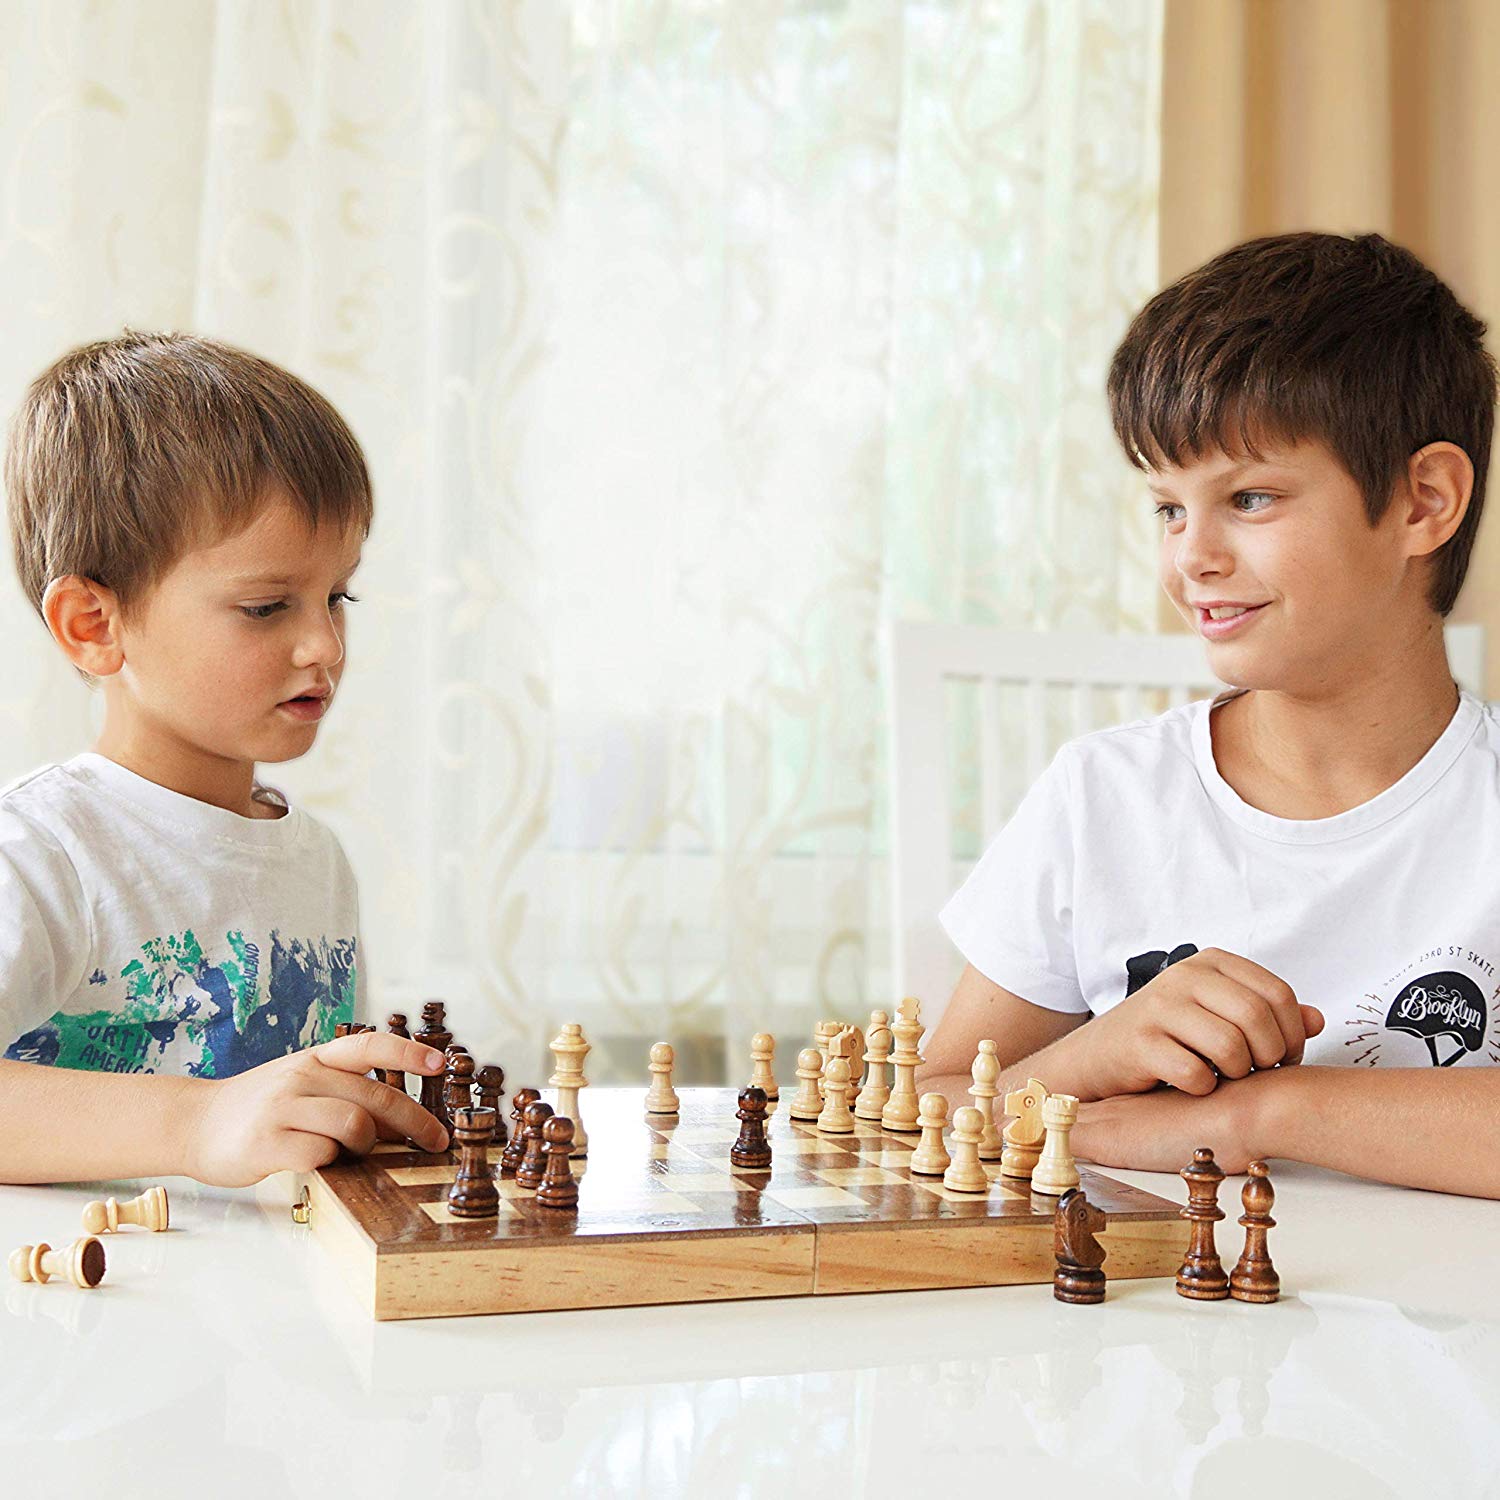 Aulas de Xadrez, P&pex Chess Kids